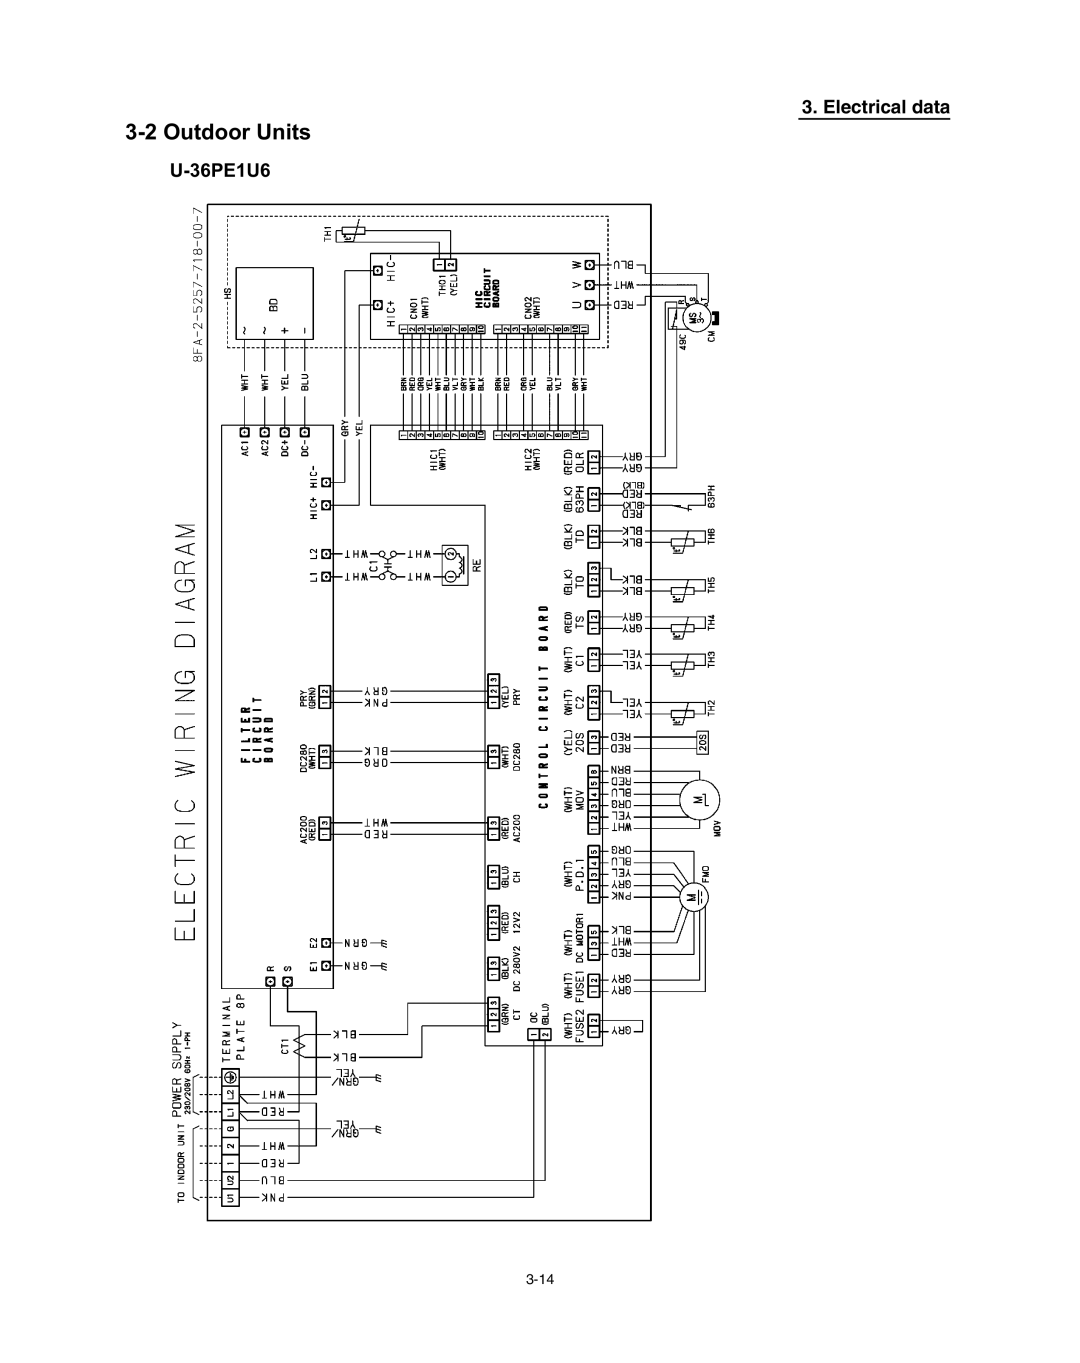 Panasonic R410A service manual 3-2Outdoor Units, Electrical data, U-36PE1U6 